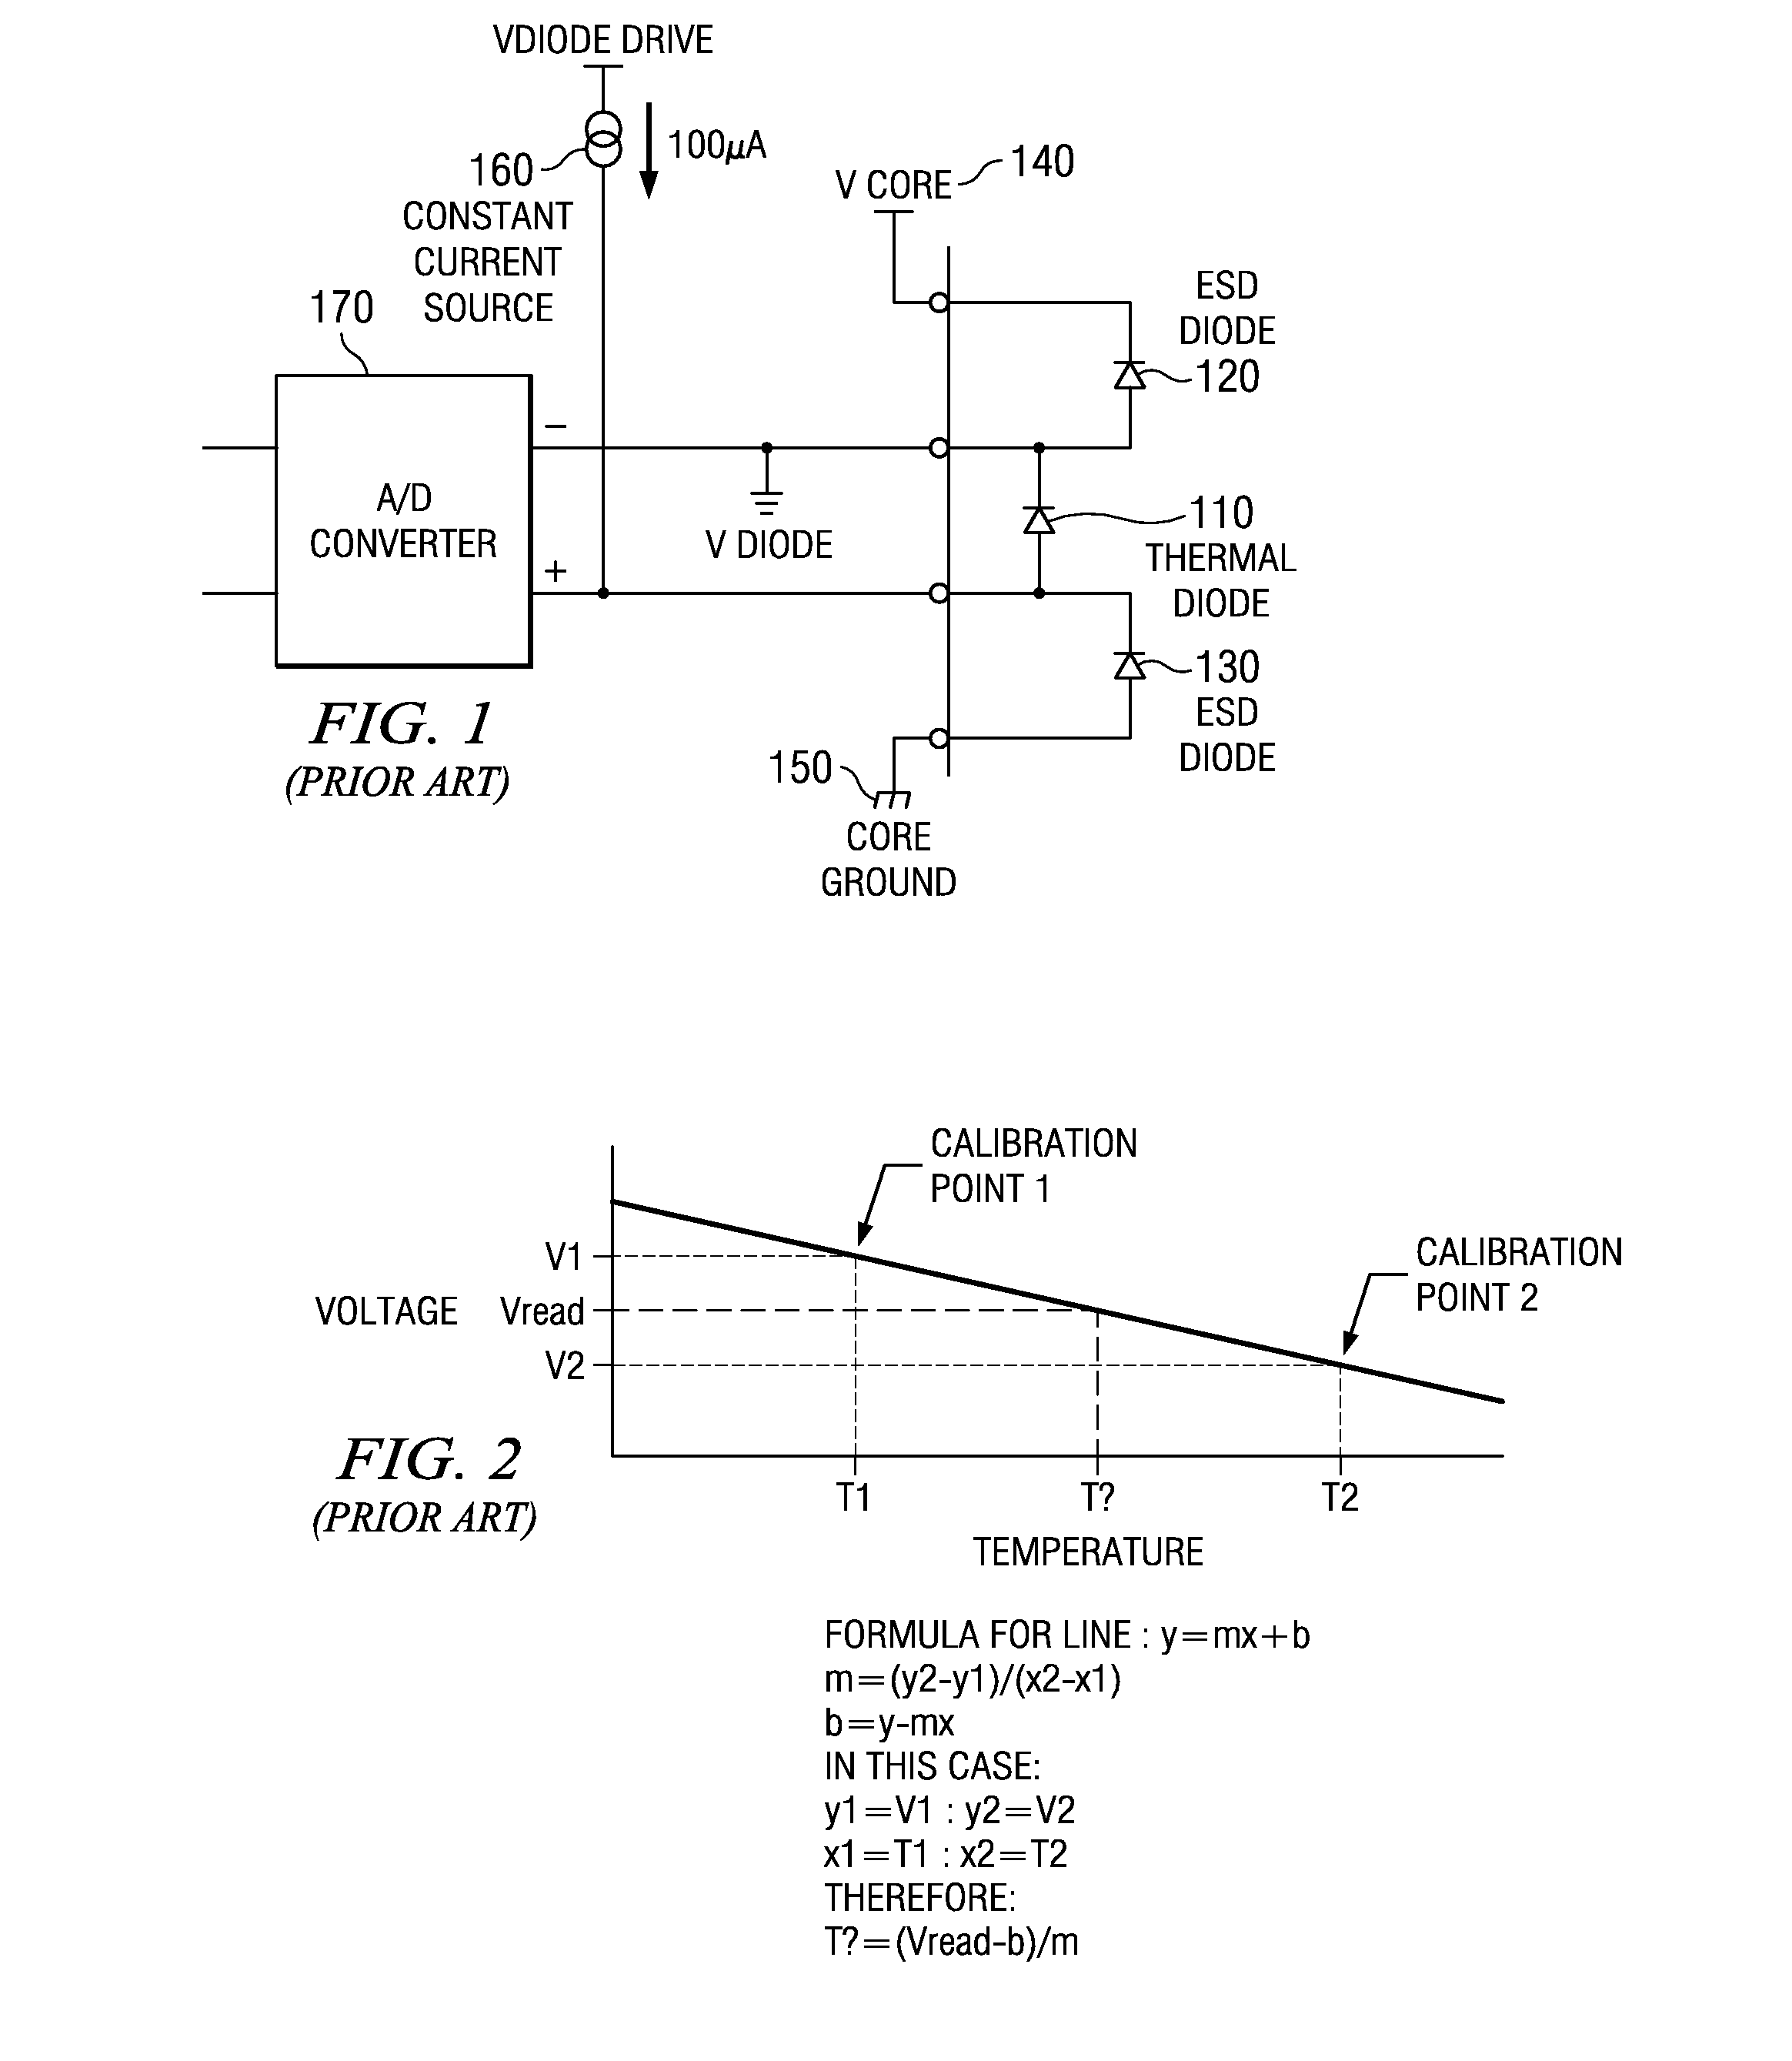 Adjusting voltage for a phase locked loop based on temperature